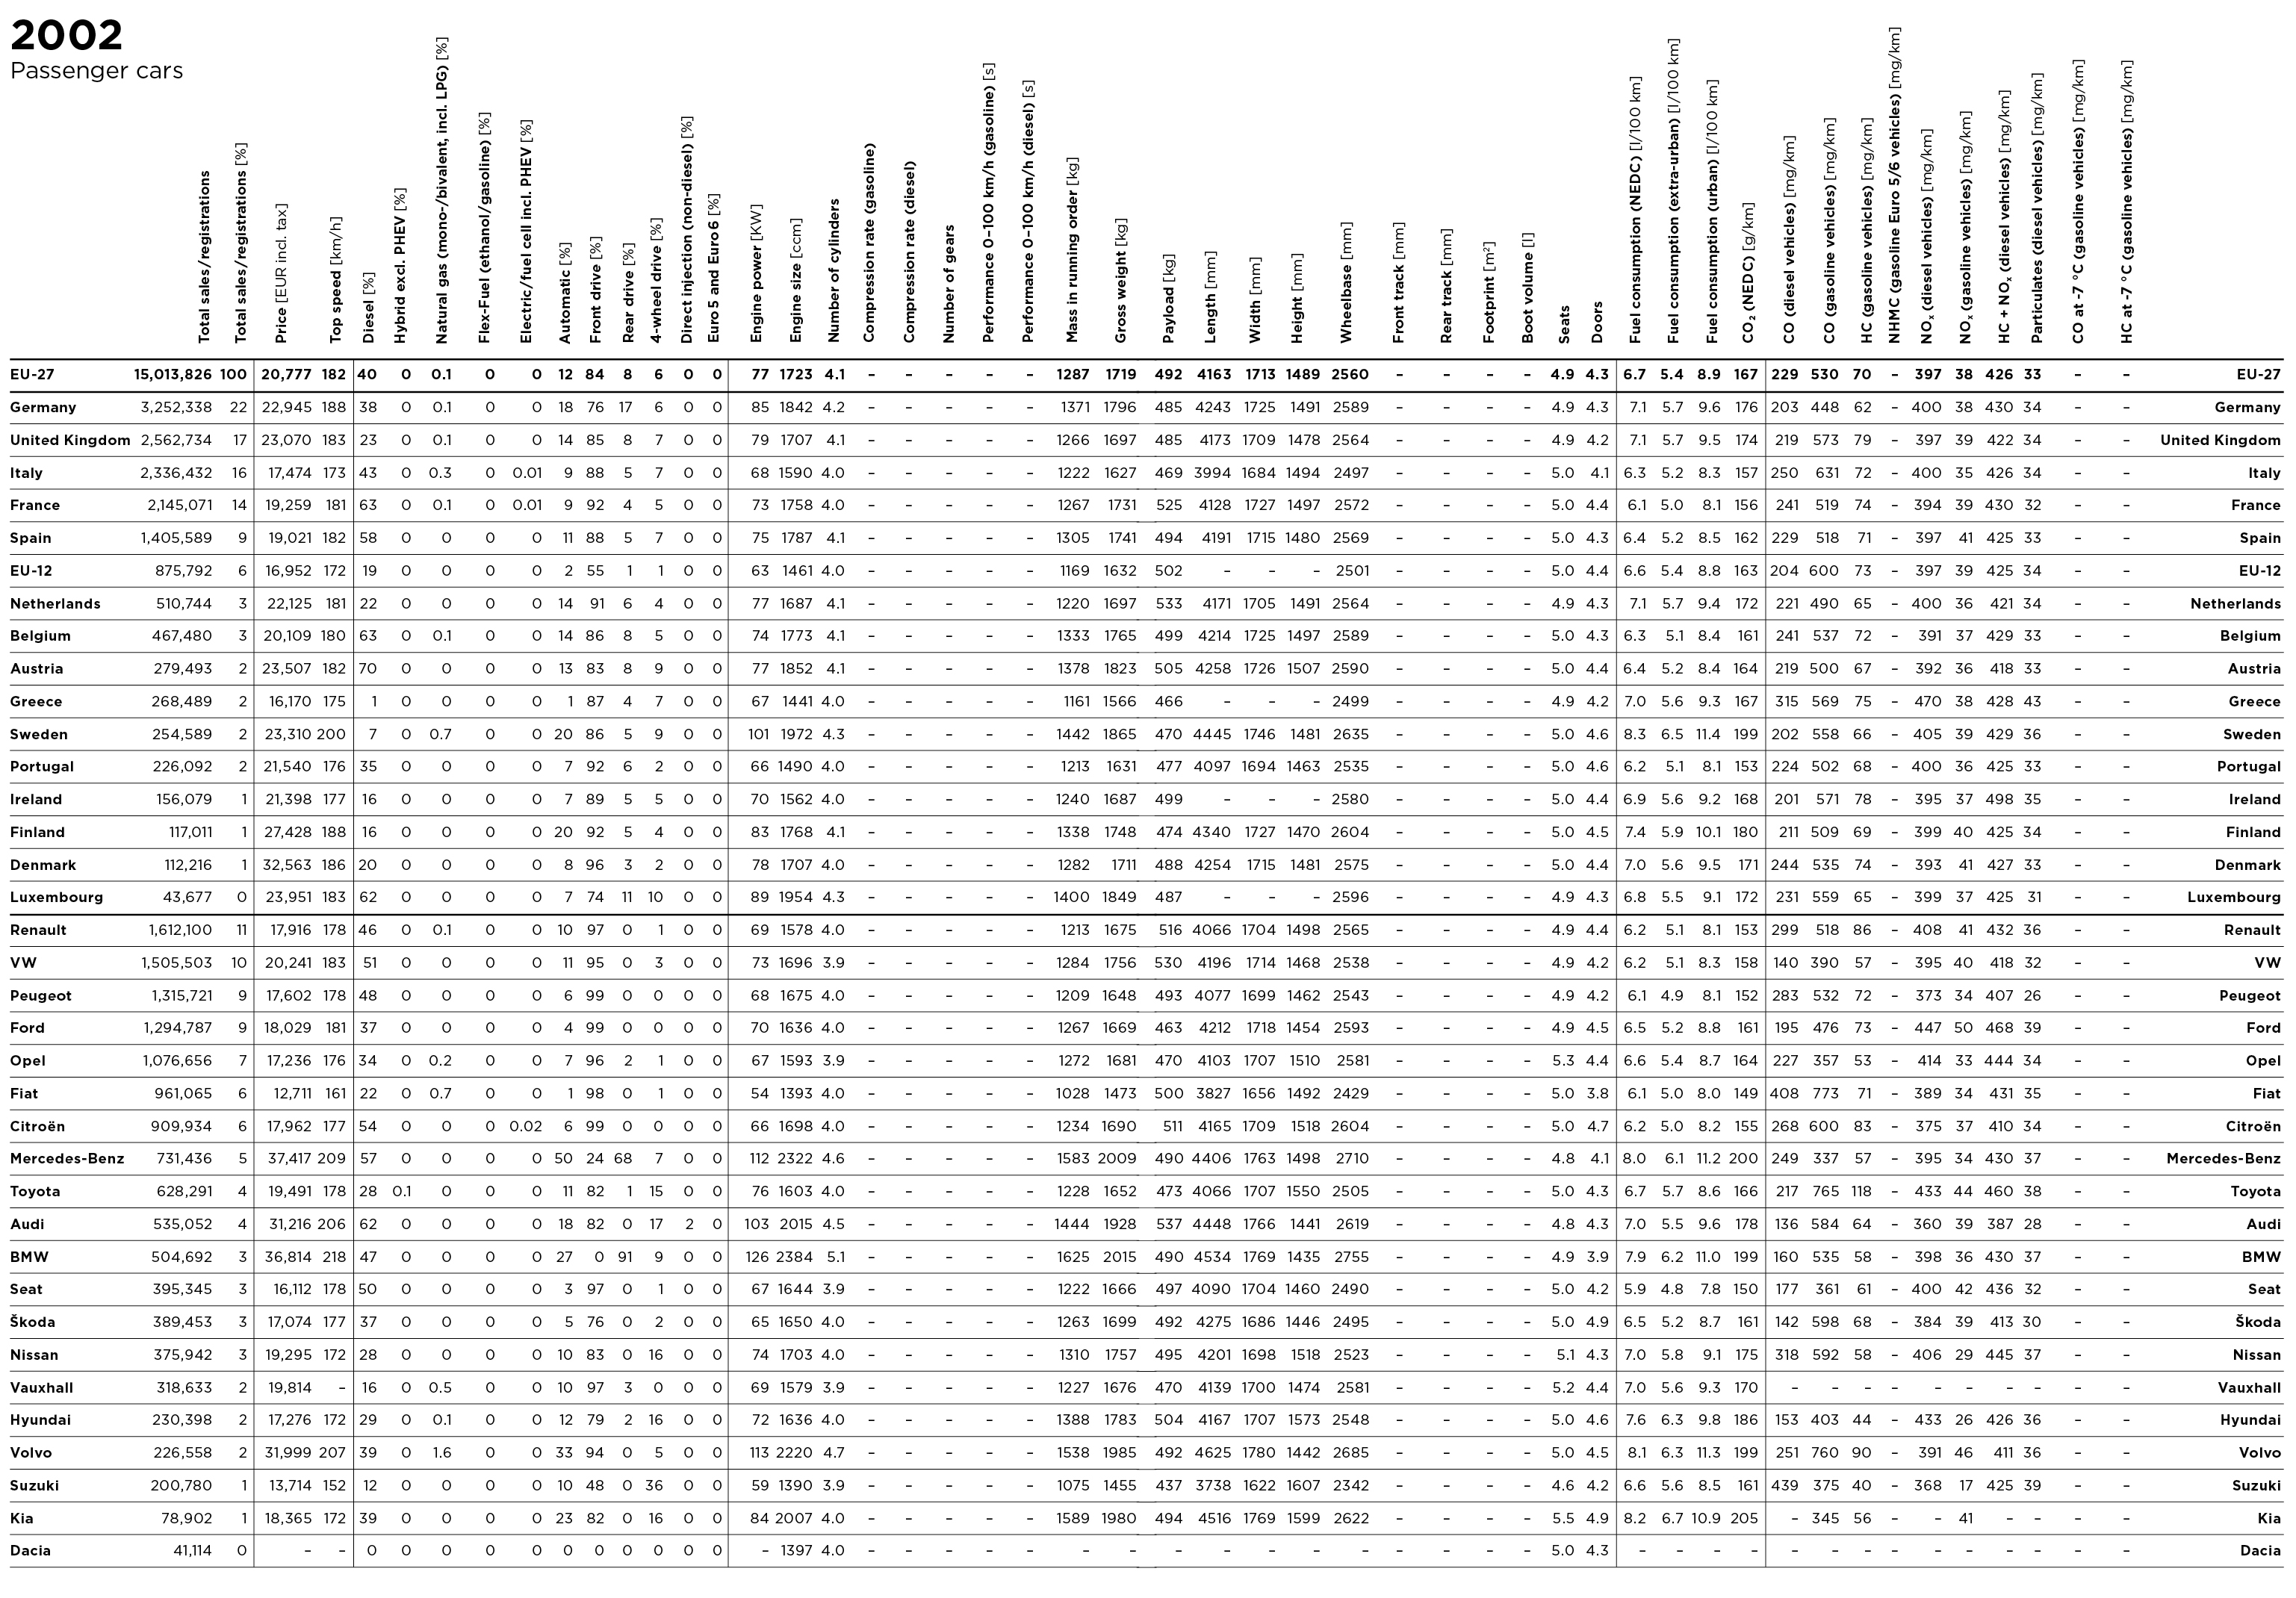 PC 2002 data